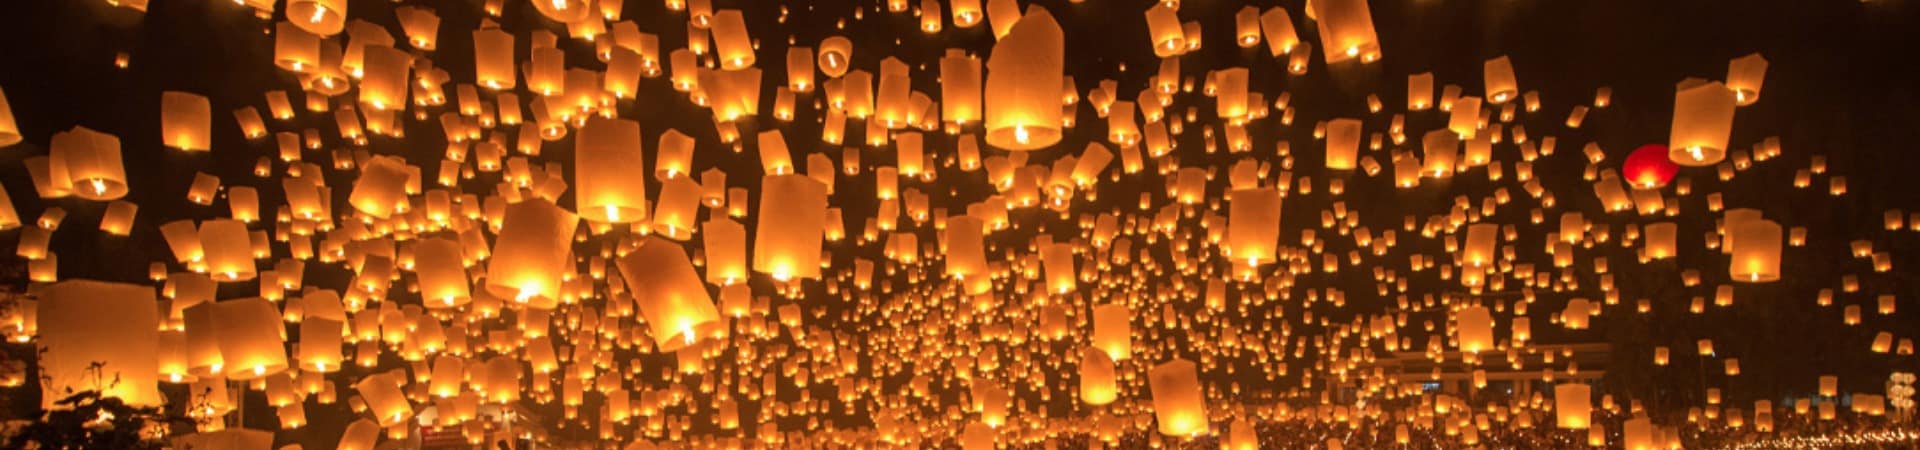 Tailandia festival das lanternas